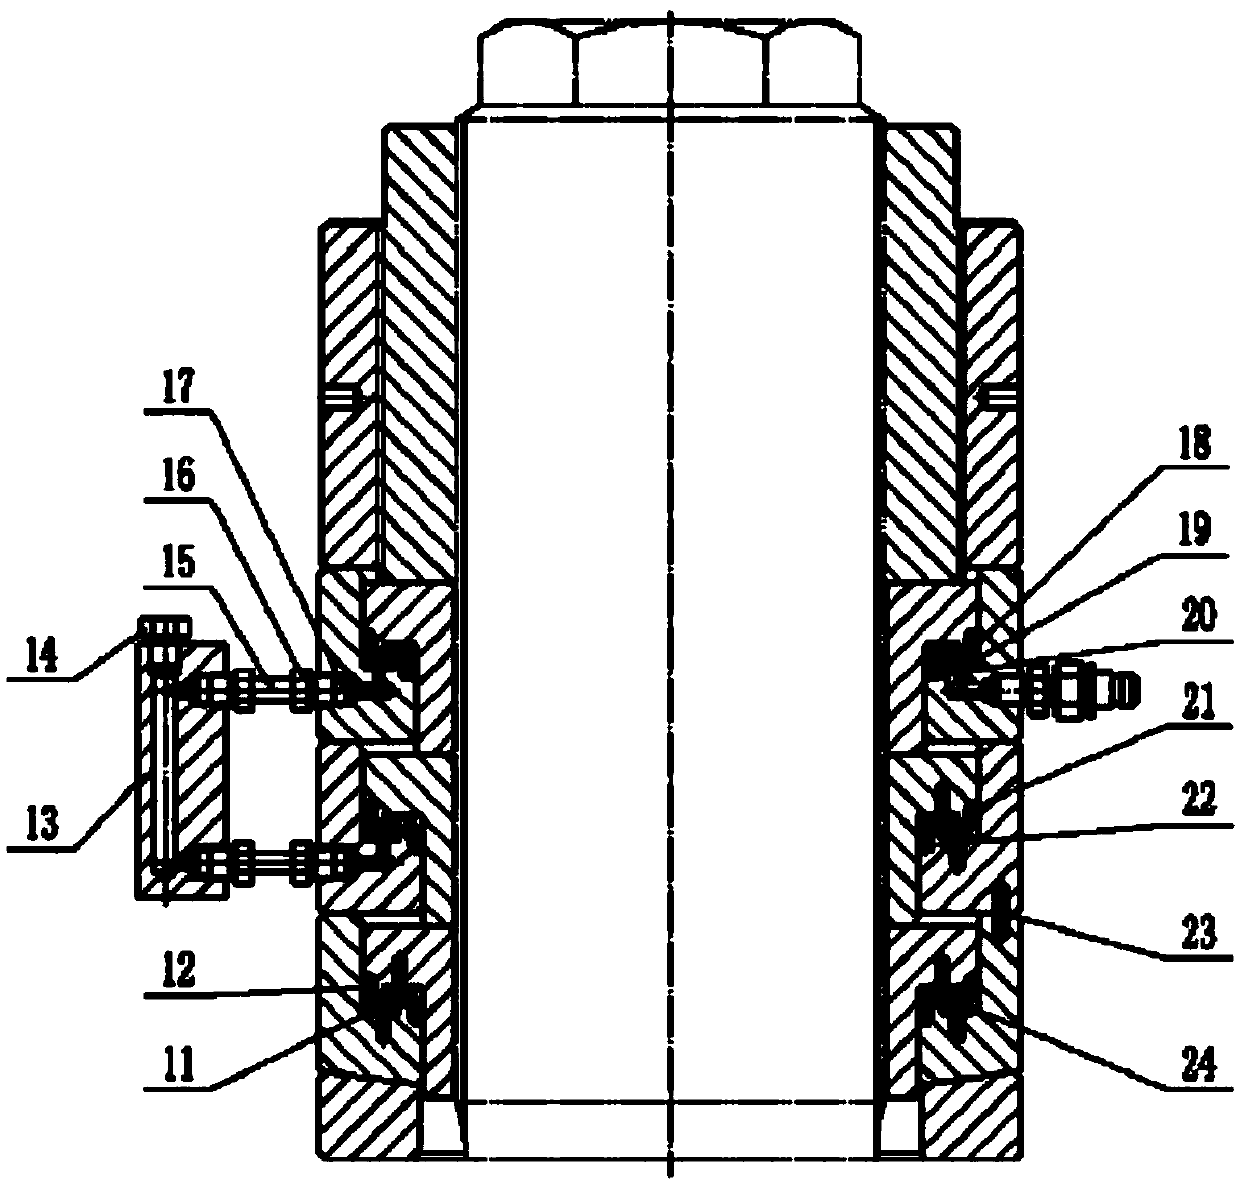 Hydraulic nut for reactor pressure vessel